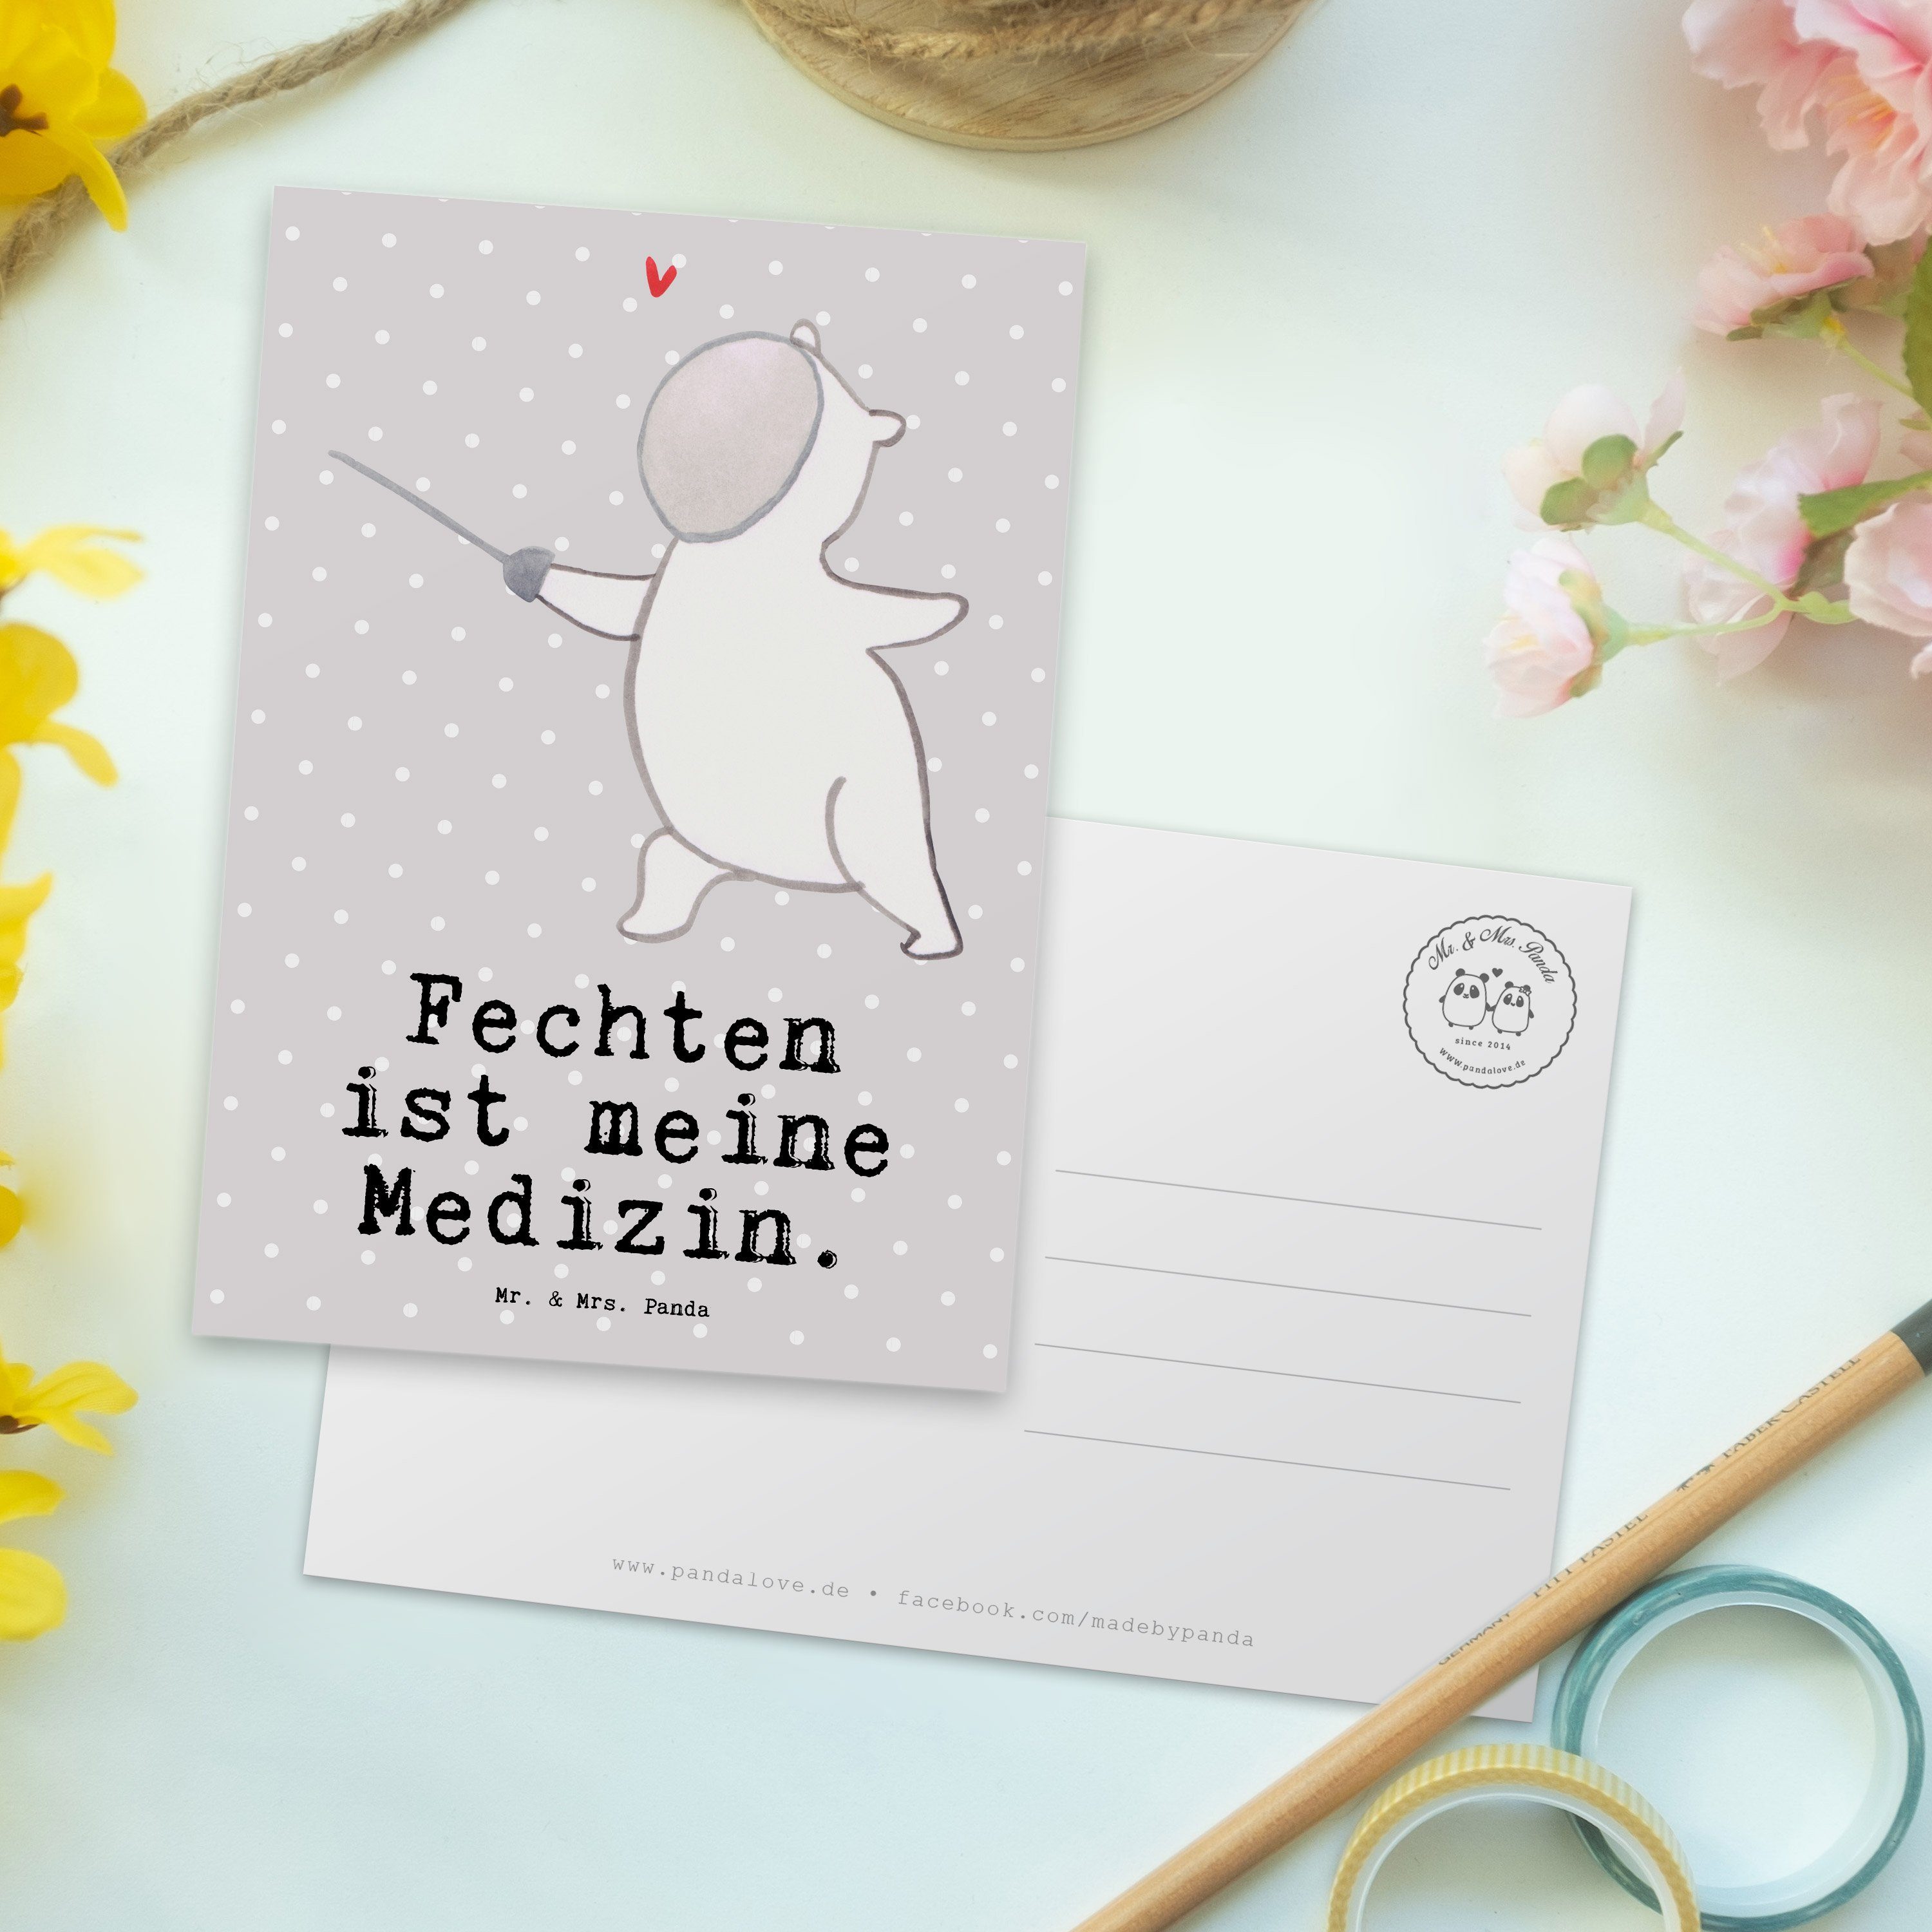 Mr. & Mrs. Panda Postkarte Panda Fechten Medizin - Grau Pastell - Geschenk, Schenken, Sportler